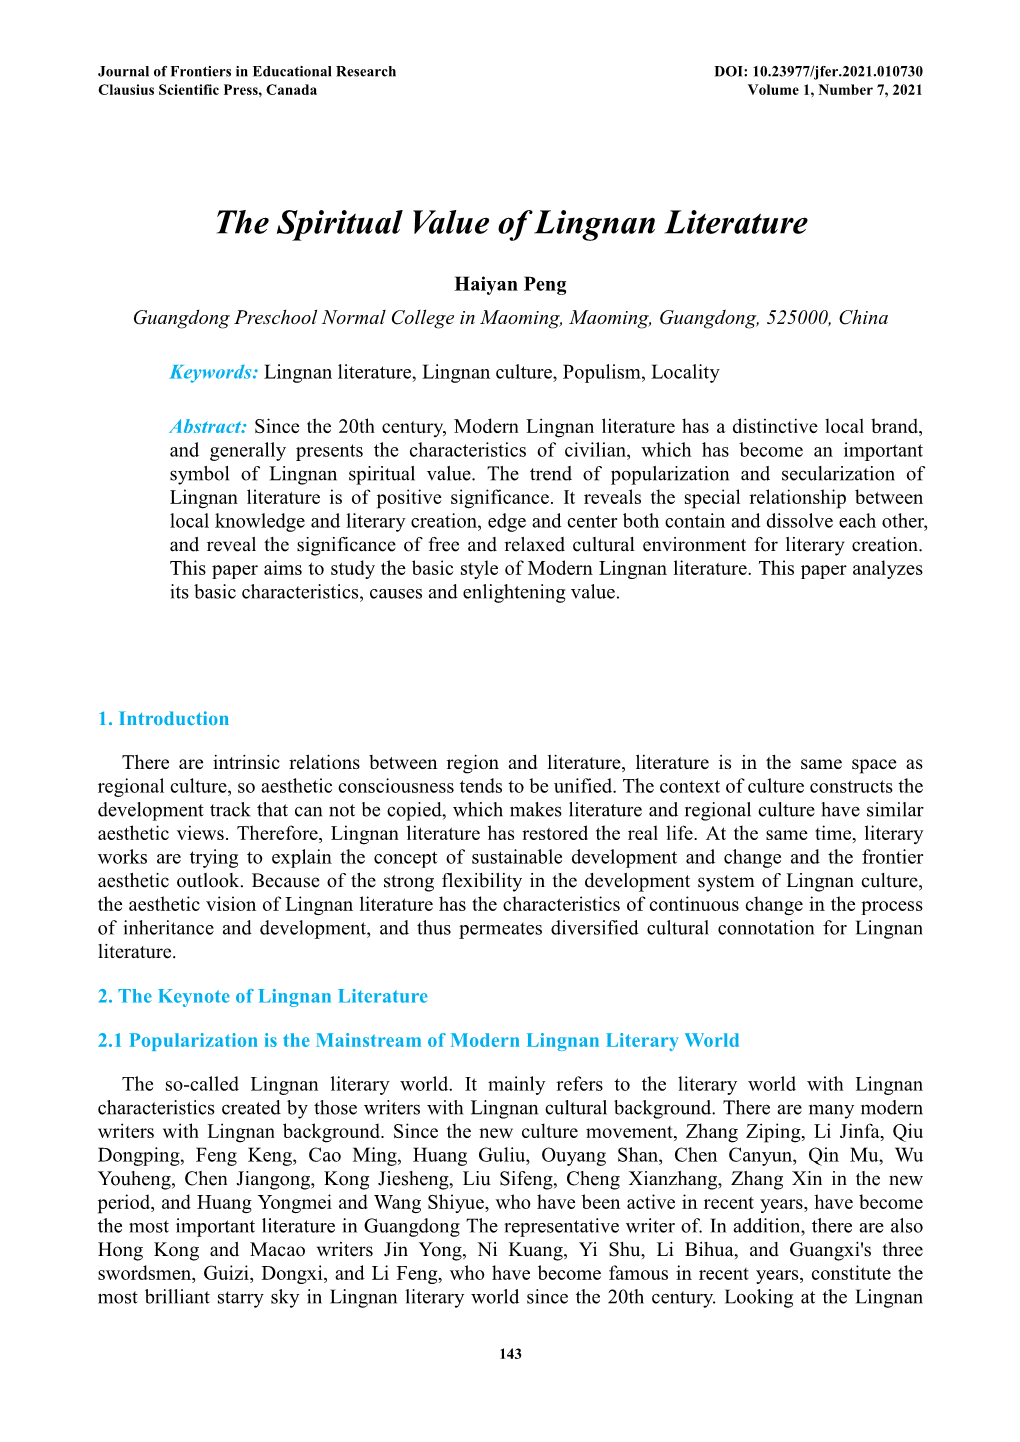 The Spiritual Value of Lingnan Literature